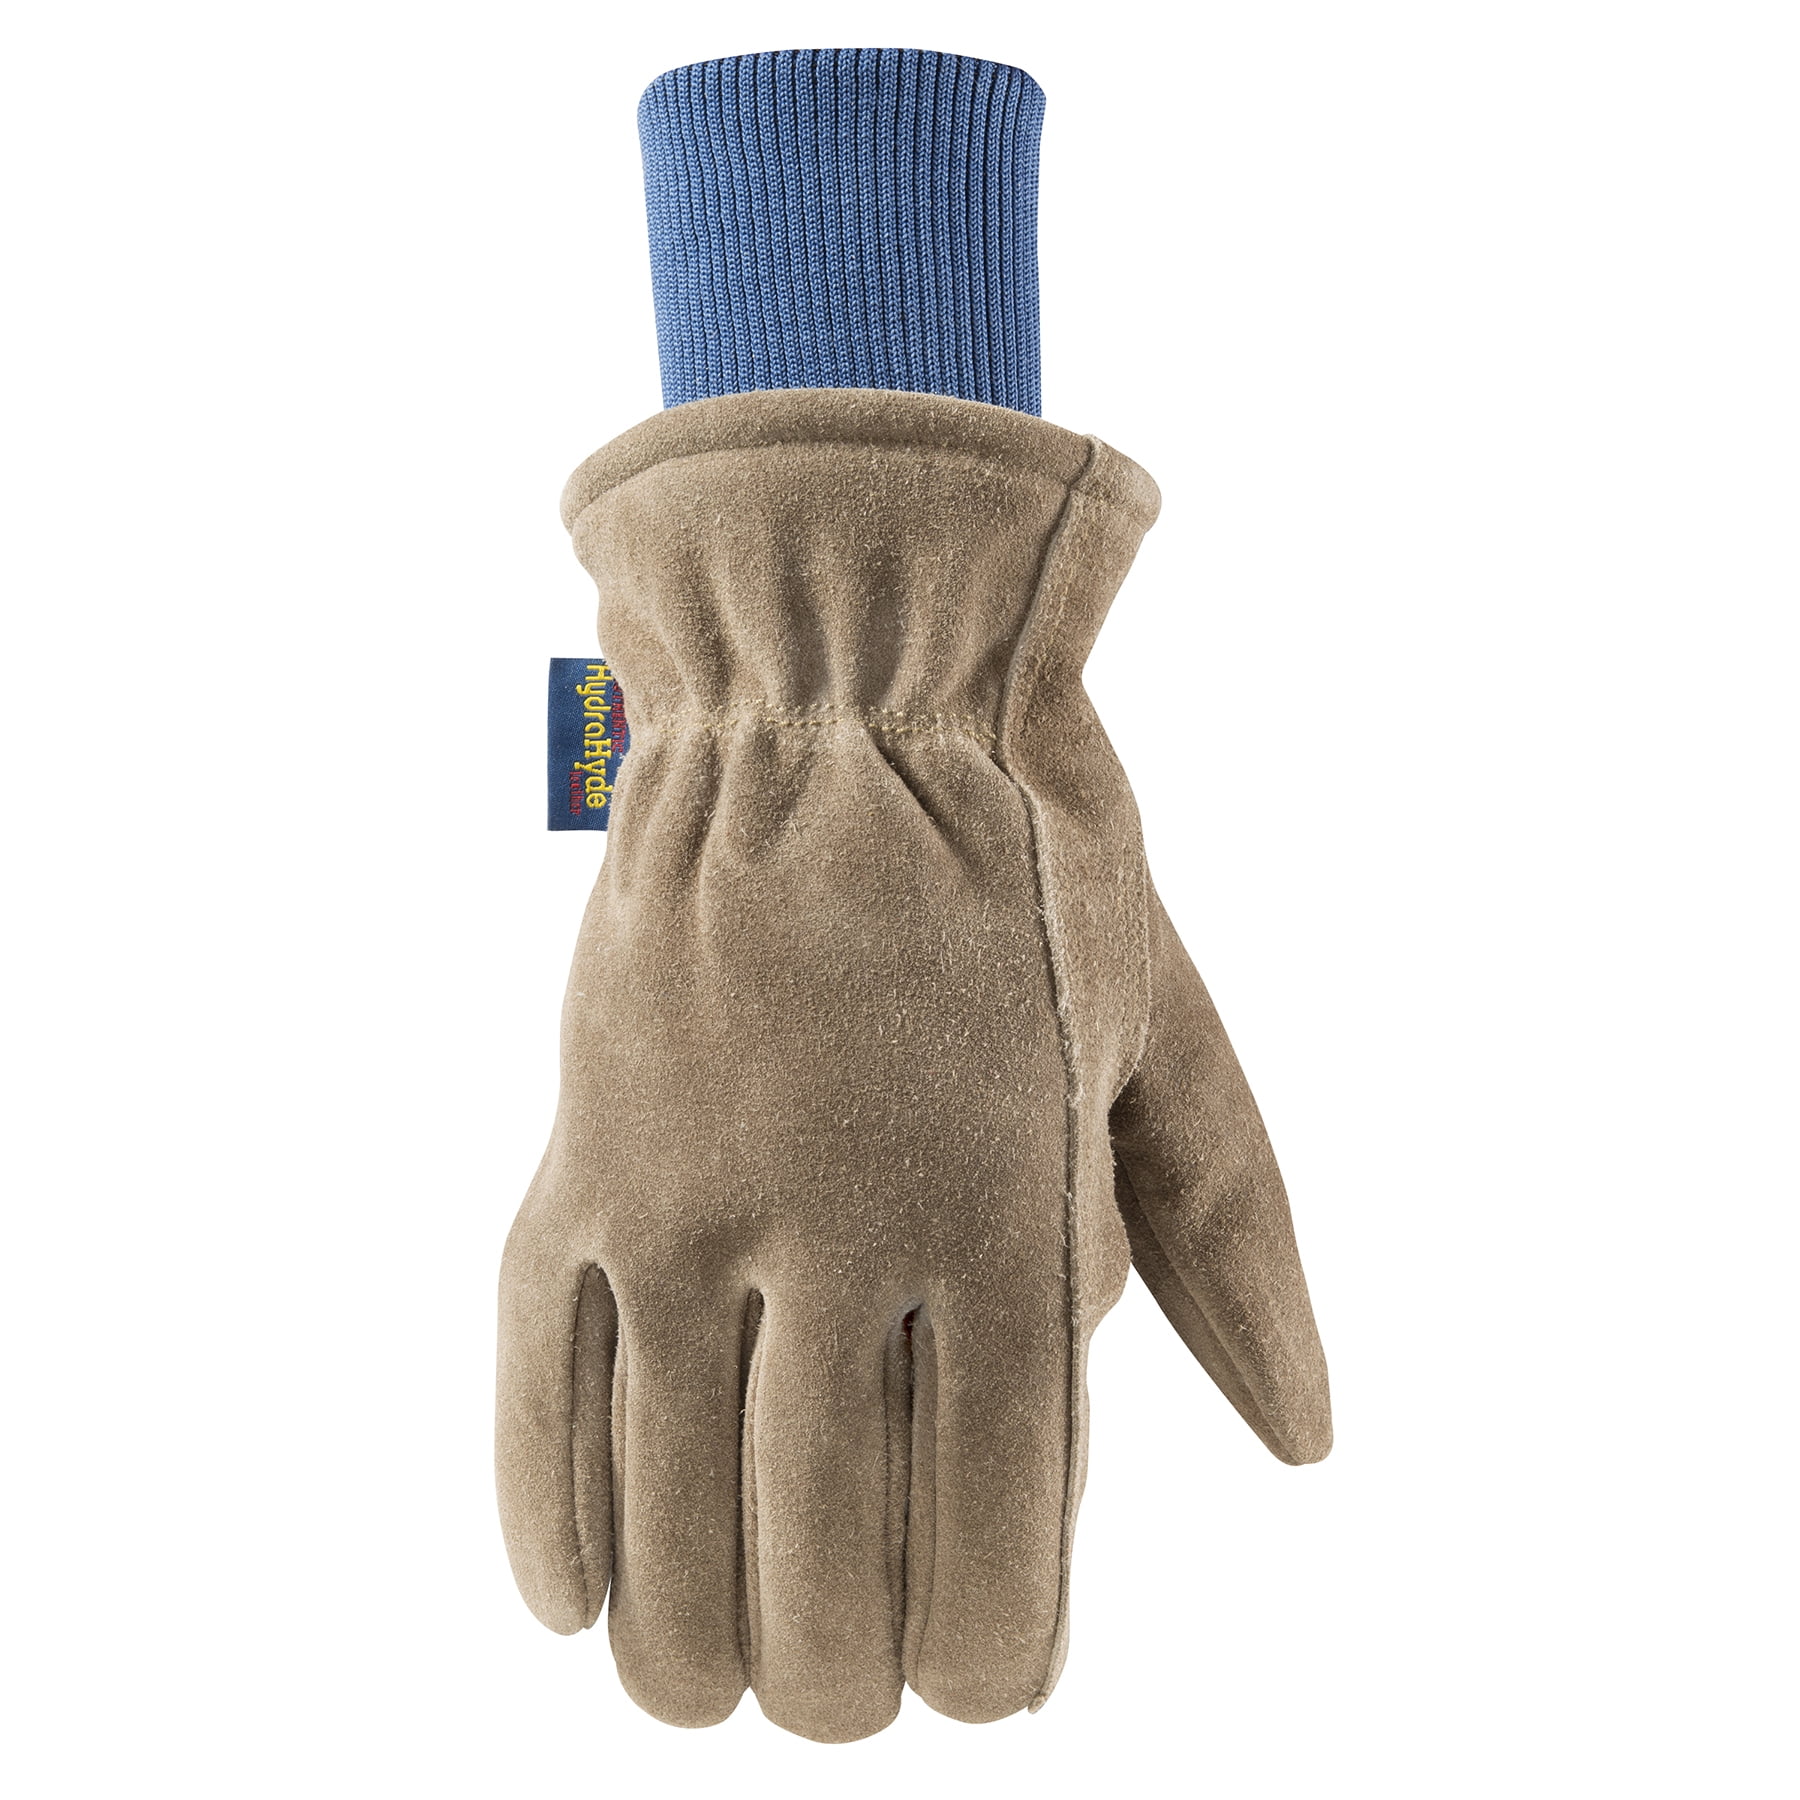 Wells Lamont Men’s Slip-On HydraHyde Full Leather Work Gloves |  Water-Resistant | X-Large